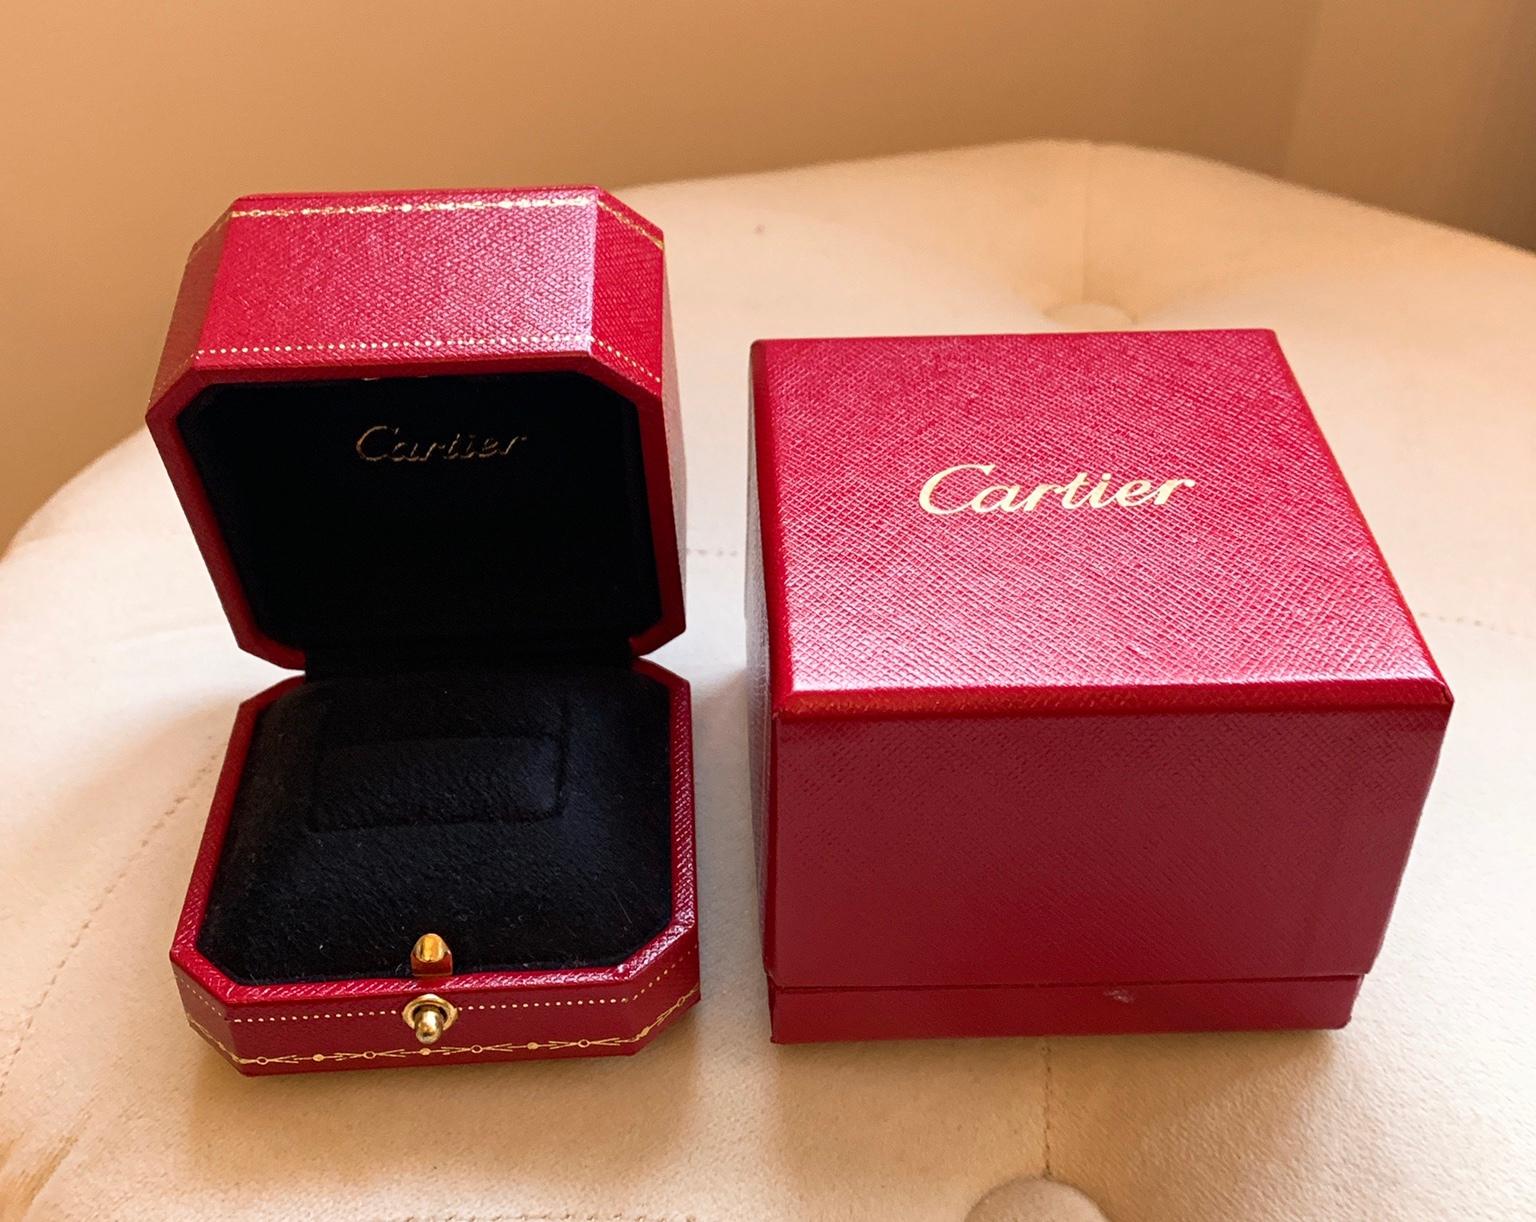 cartier ring box uk